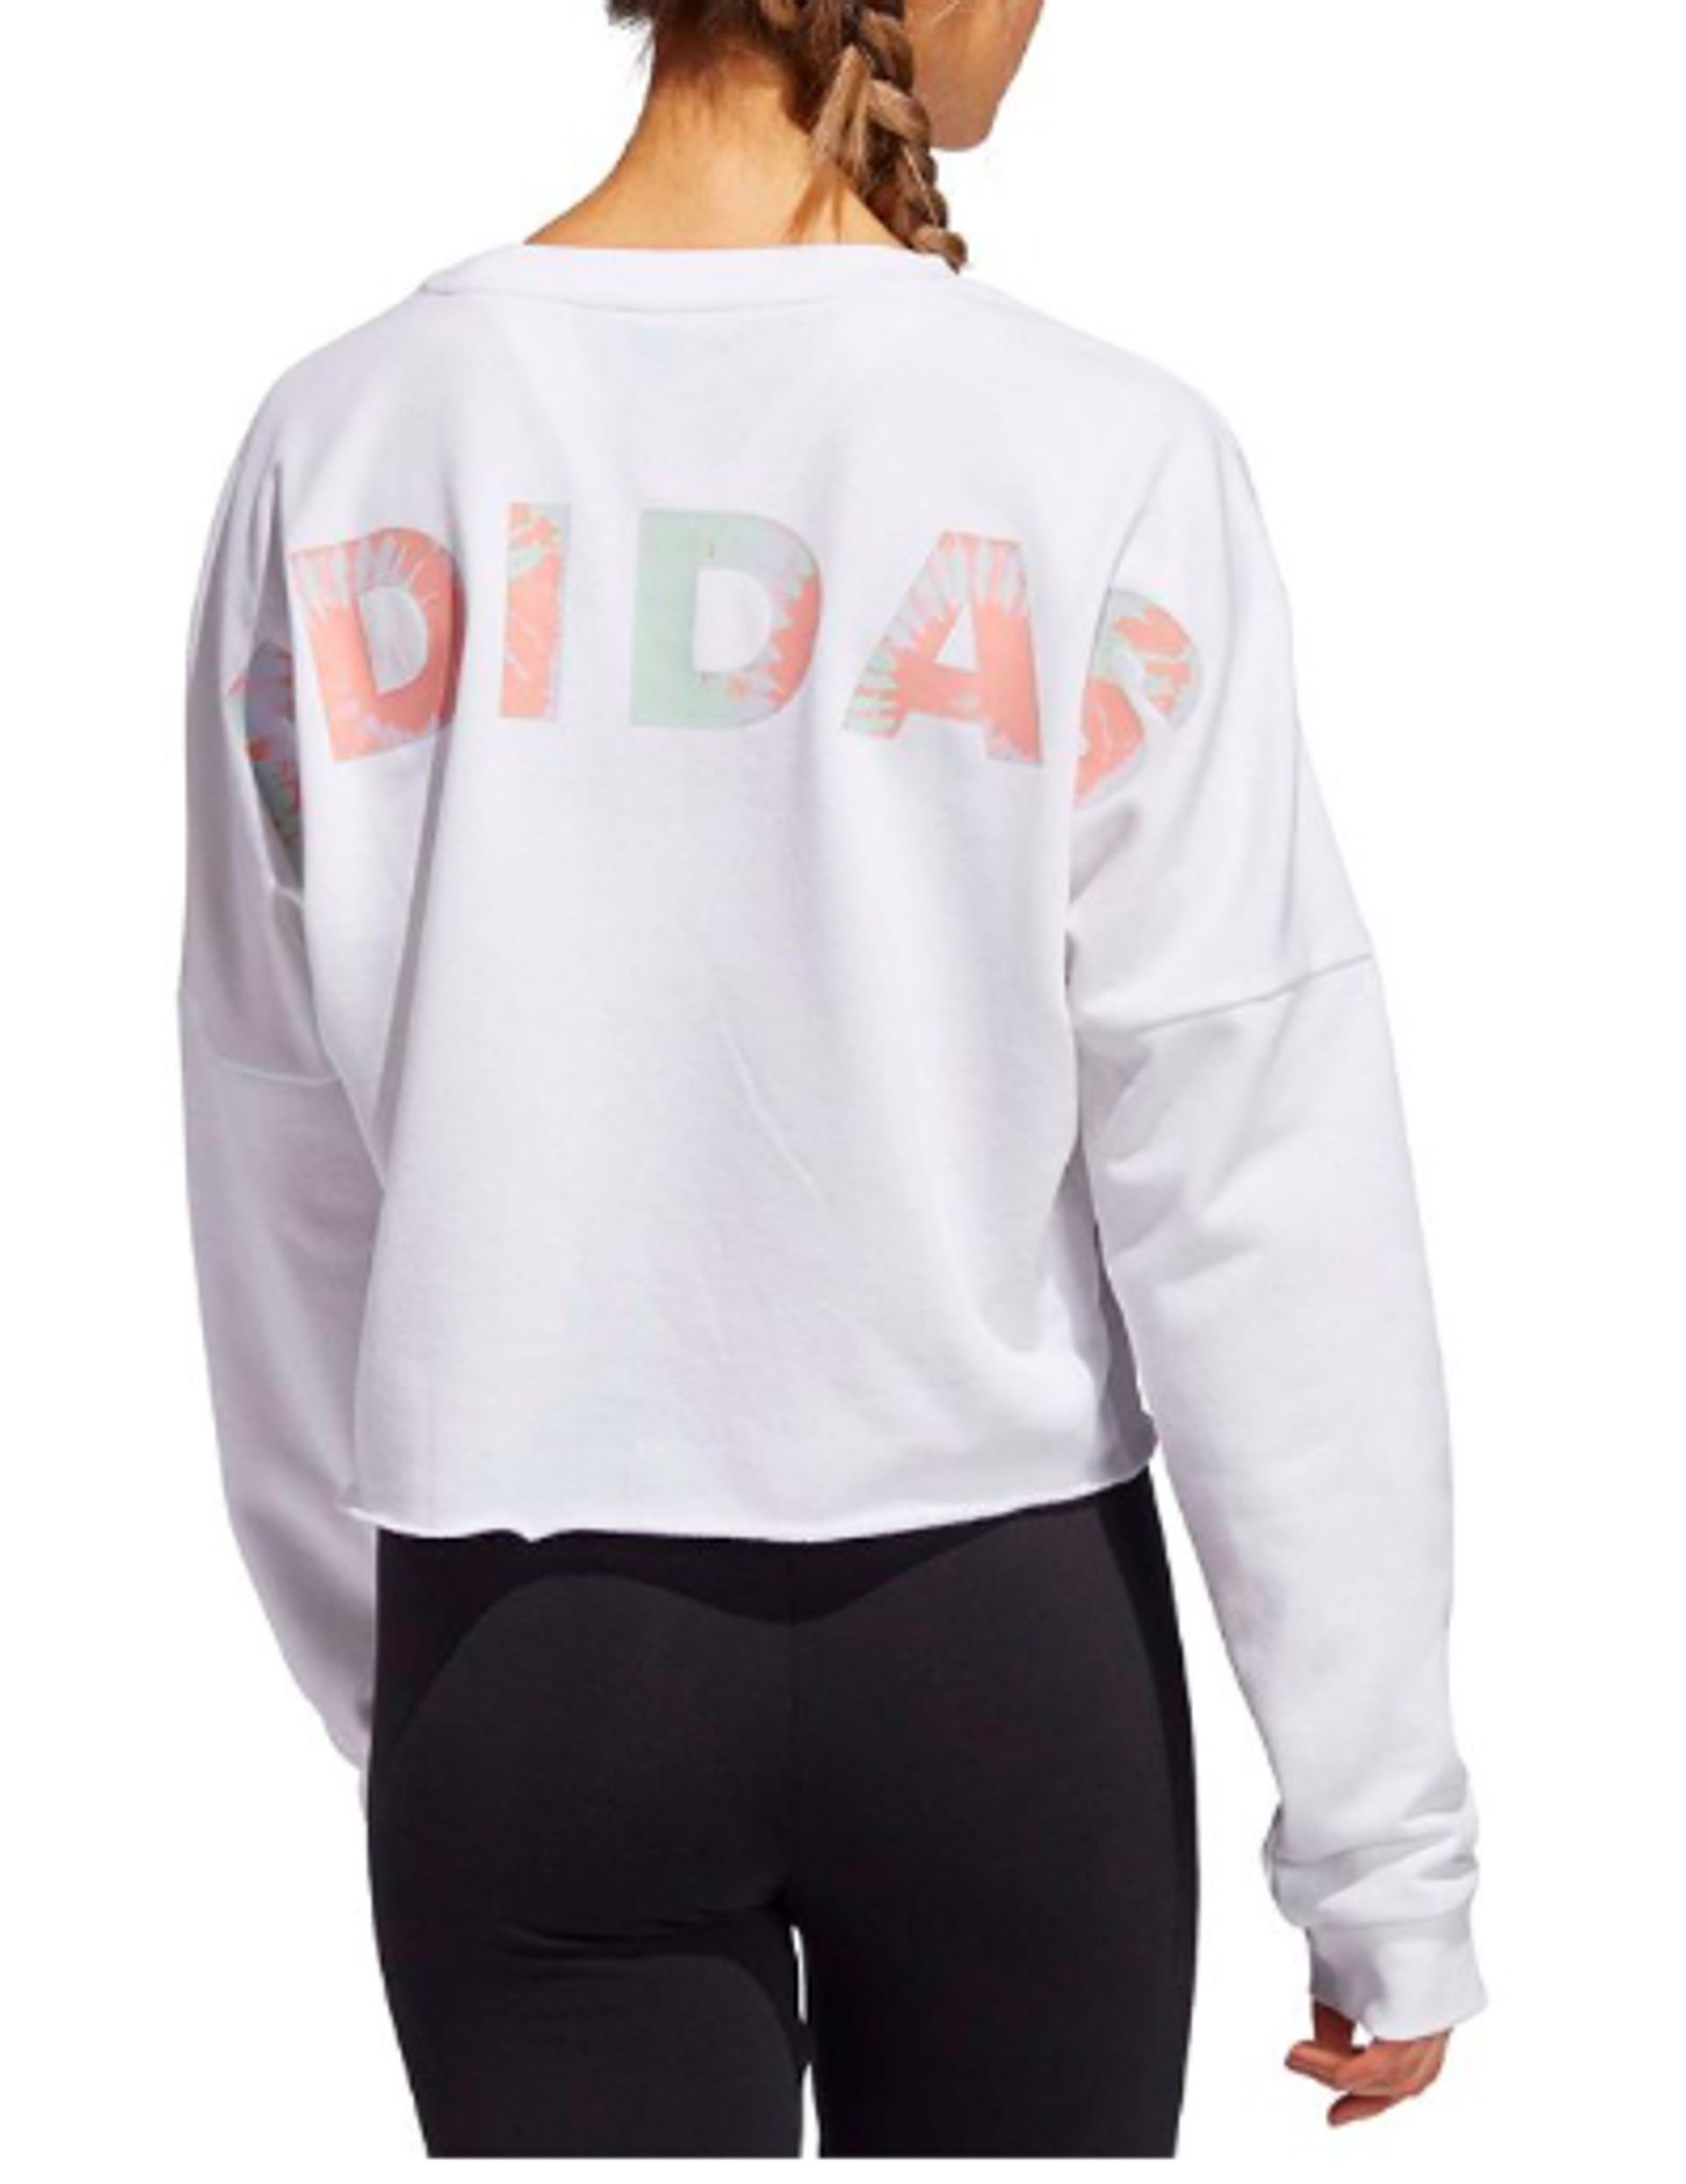 SALE Adidas Tie-Dye sweater - Macys 